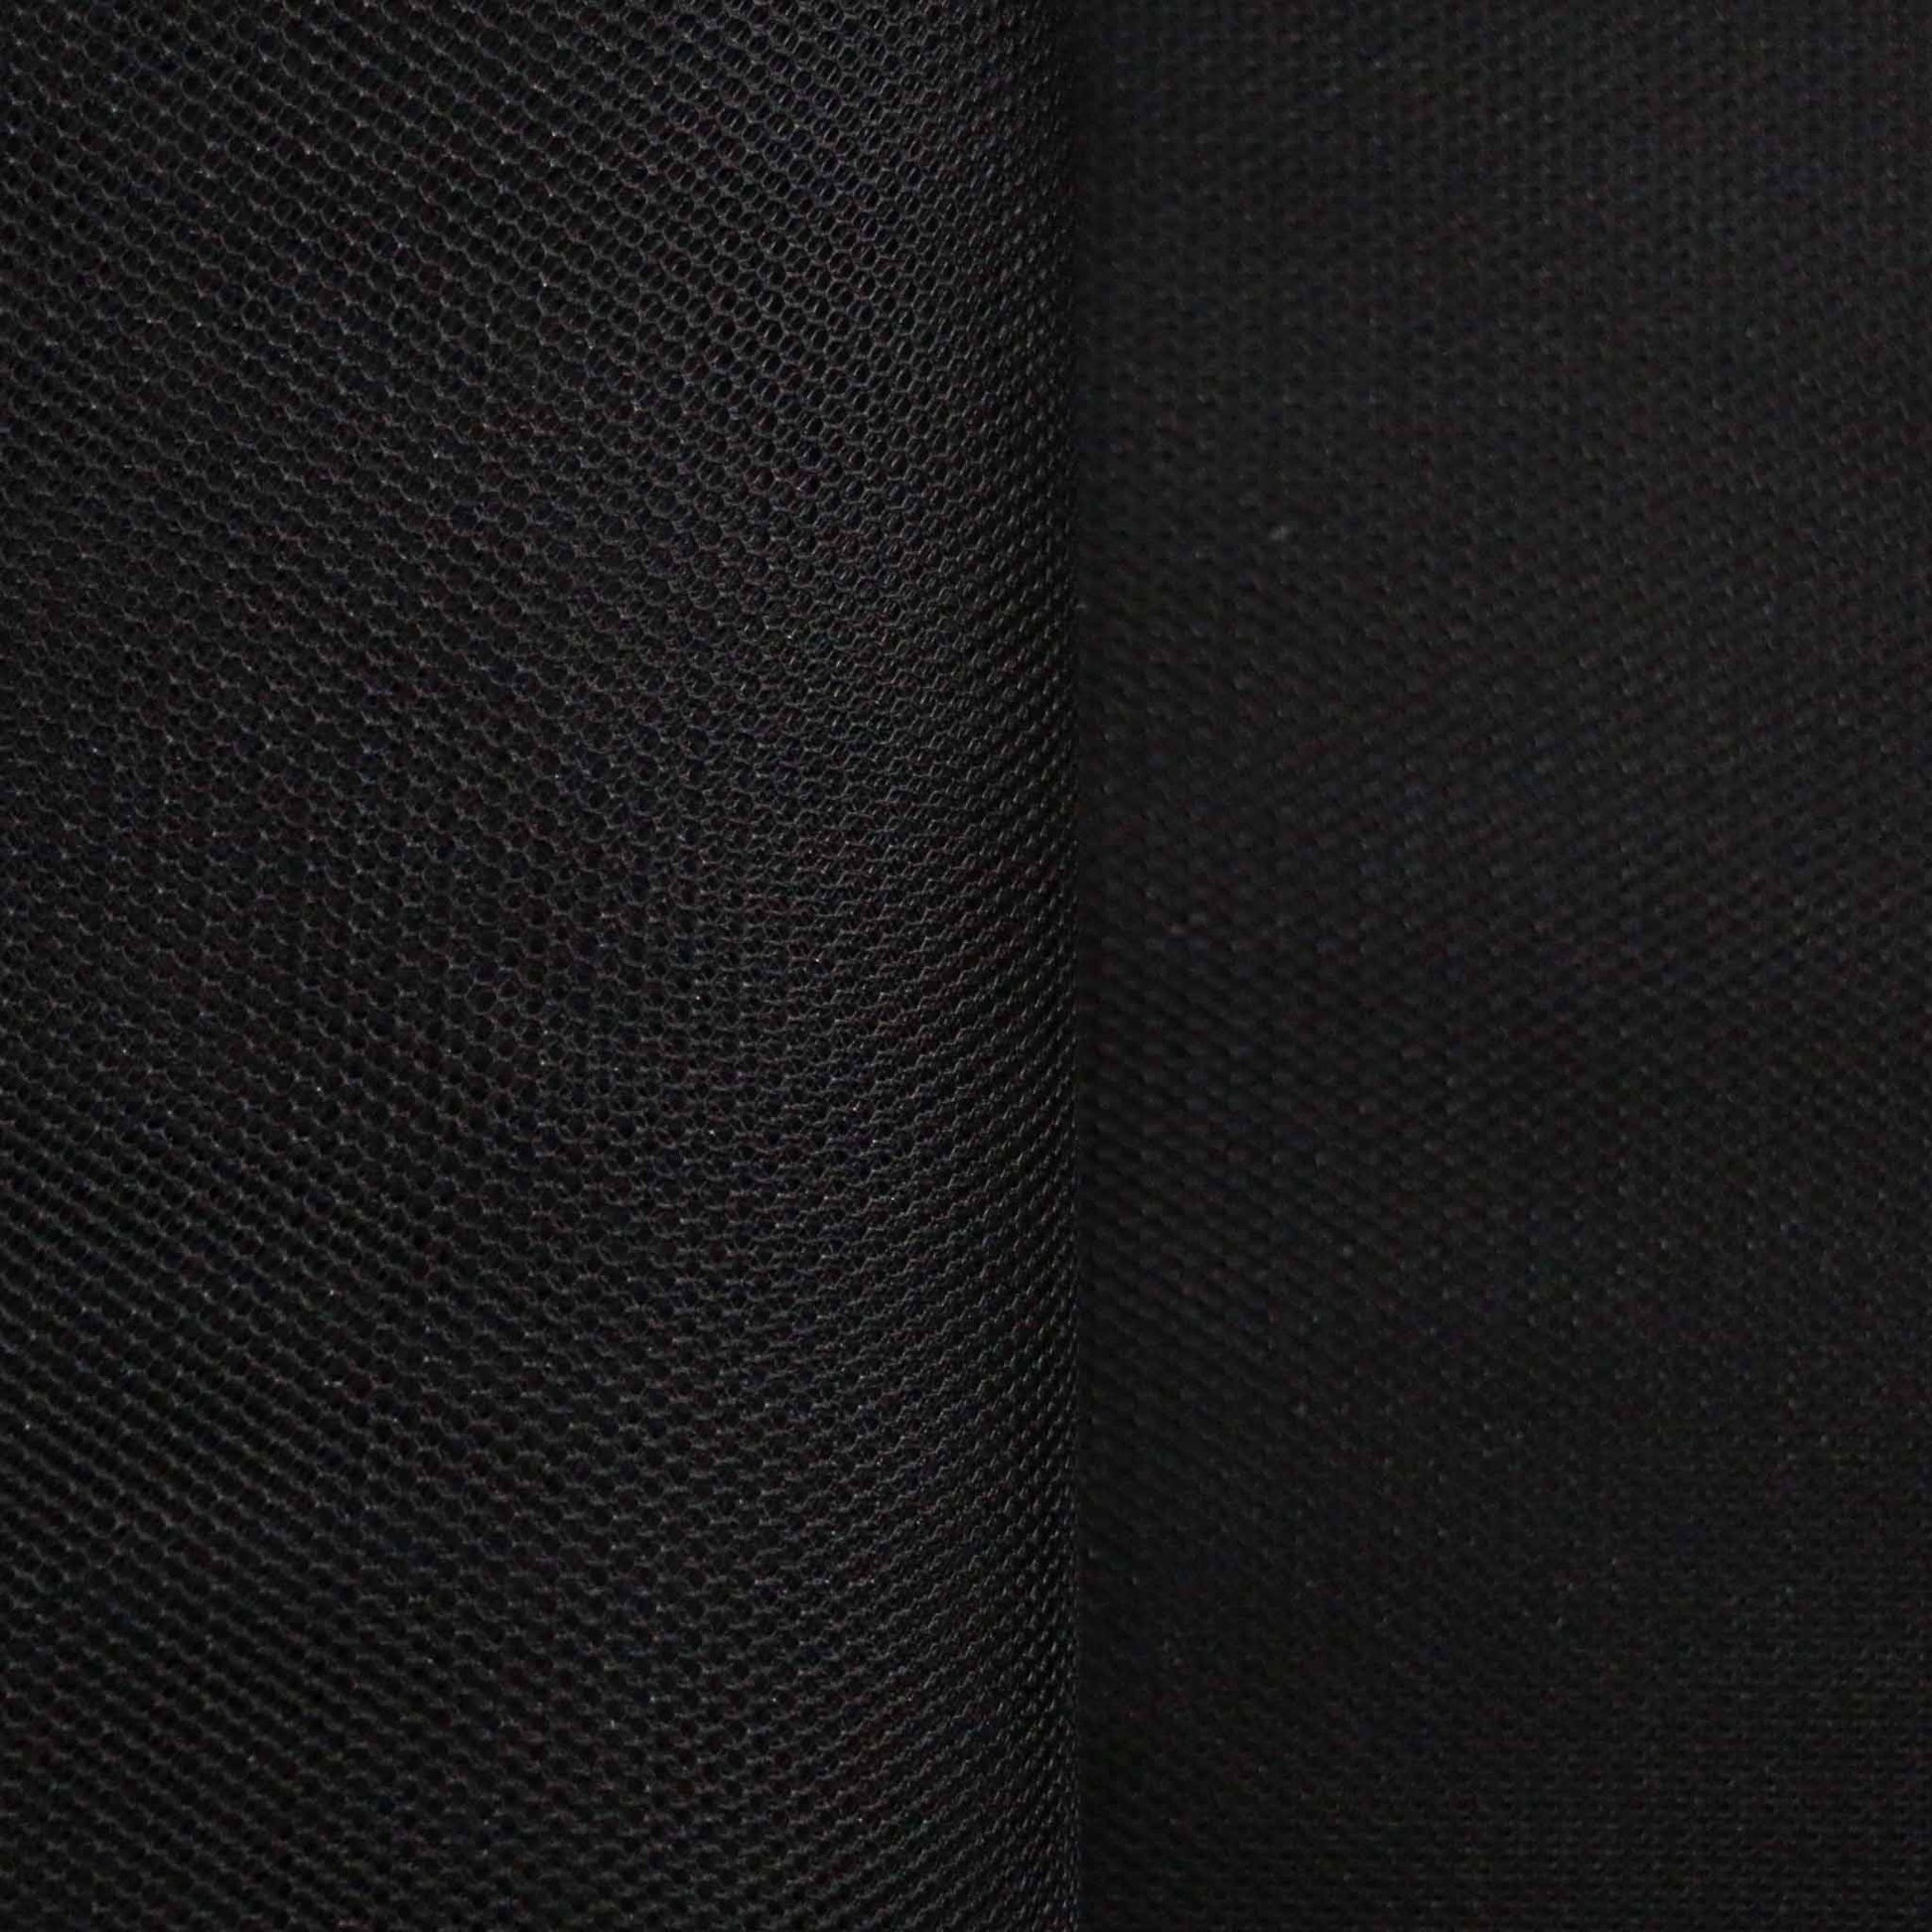 plain black dressmaking netting tulle fabric